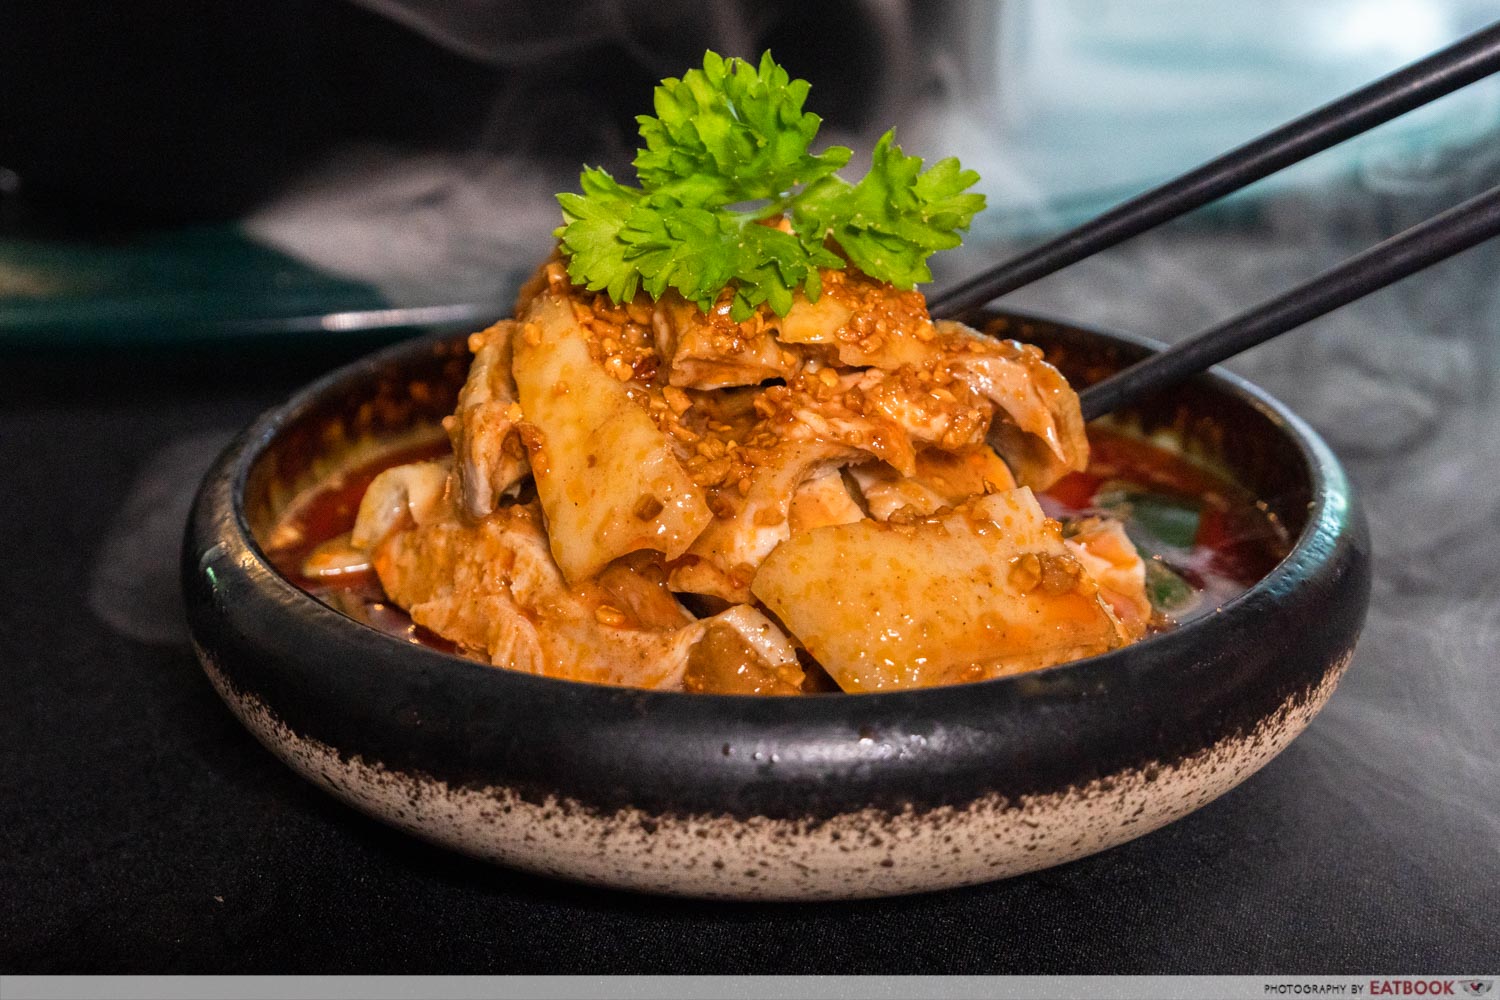 yanxi dimsum & hotpot - cold poached chicken